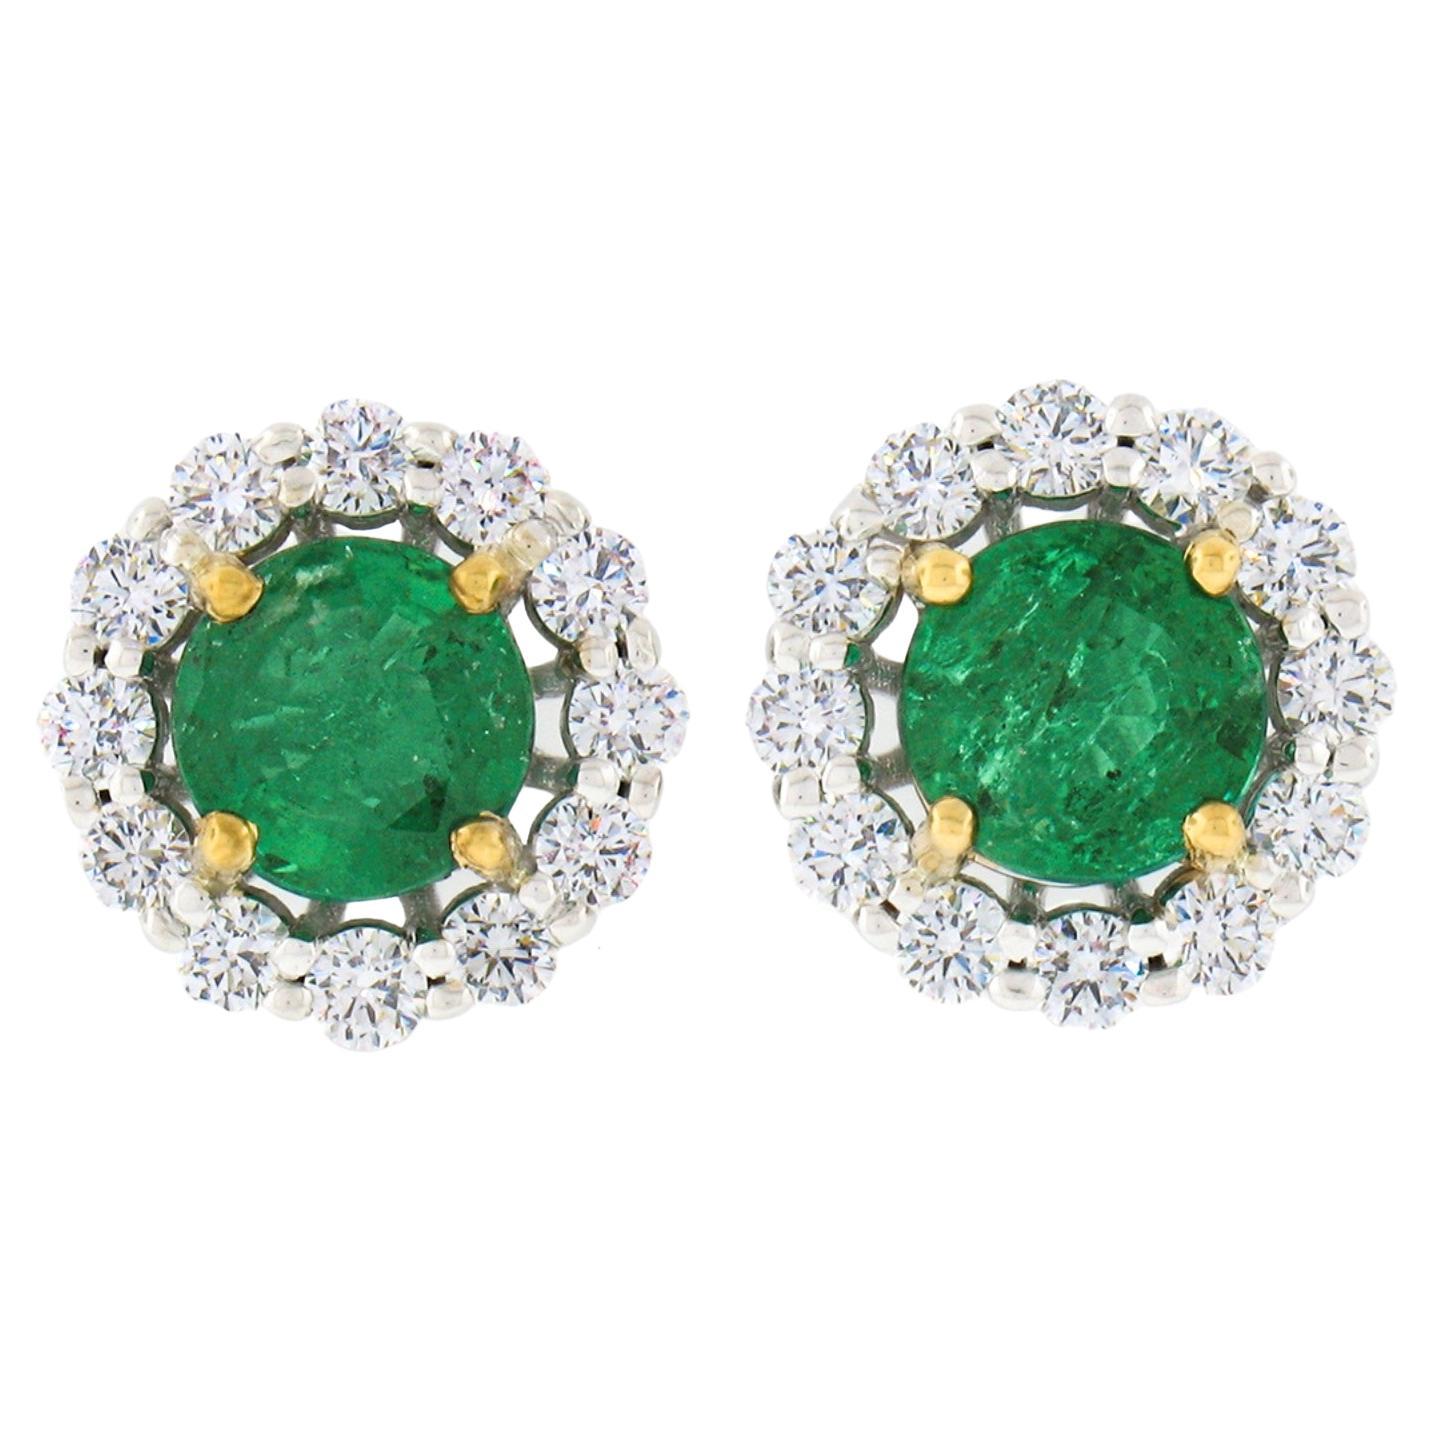 New 18k TT Gold 2.40ctw Round Brilliant Emerald W/ Diamond Halo Stud Earrings